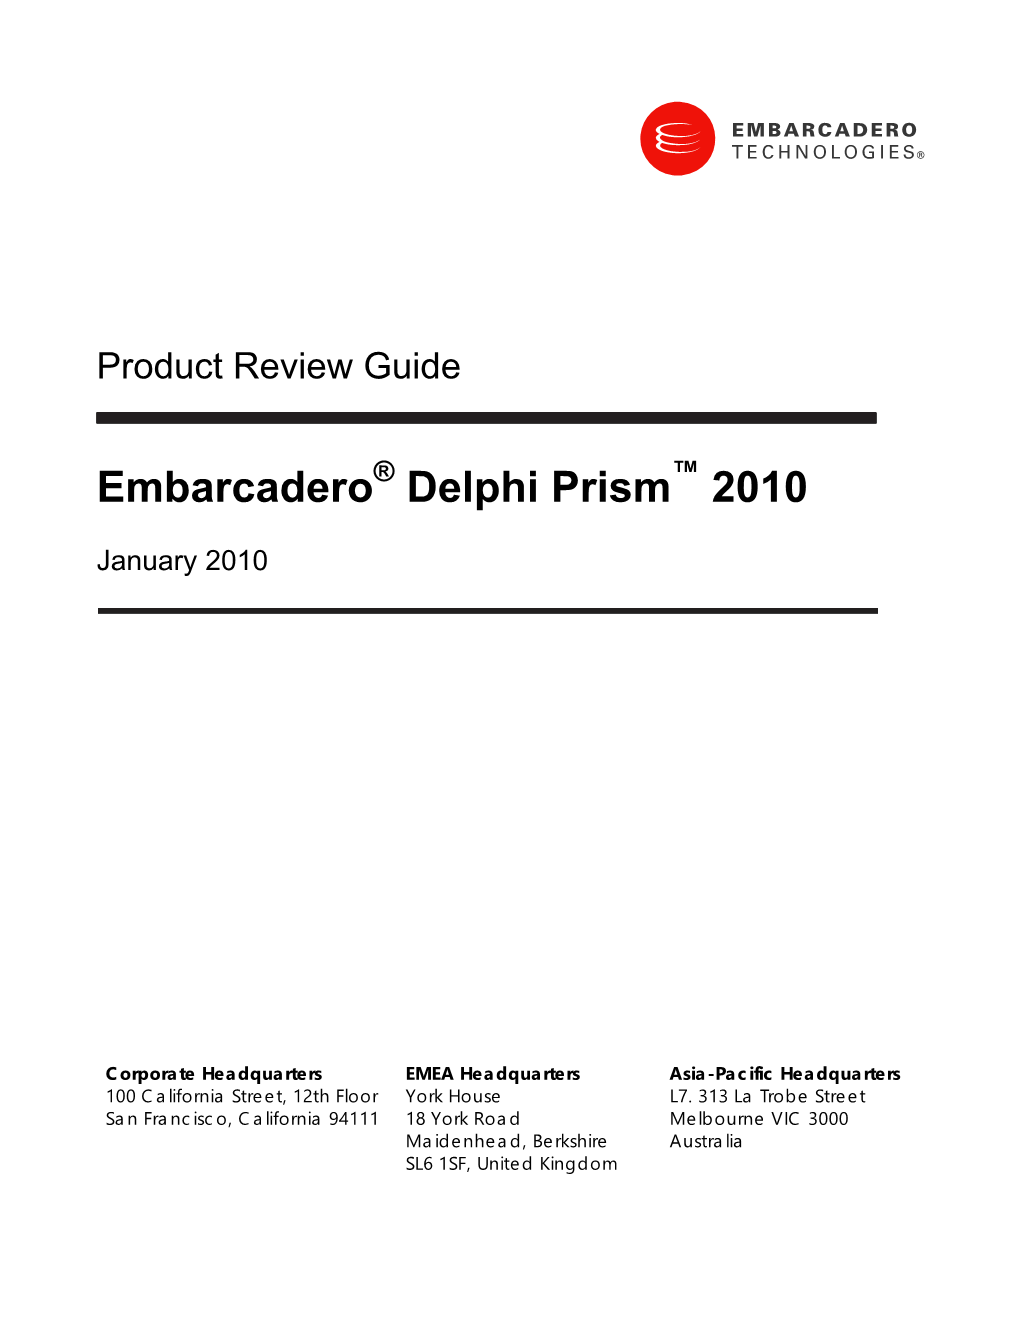 Embarcadero Delphi Prism™ 2010 Review Guide